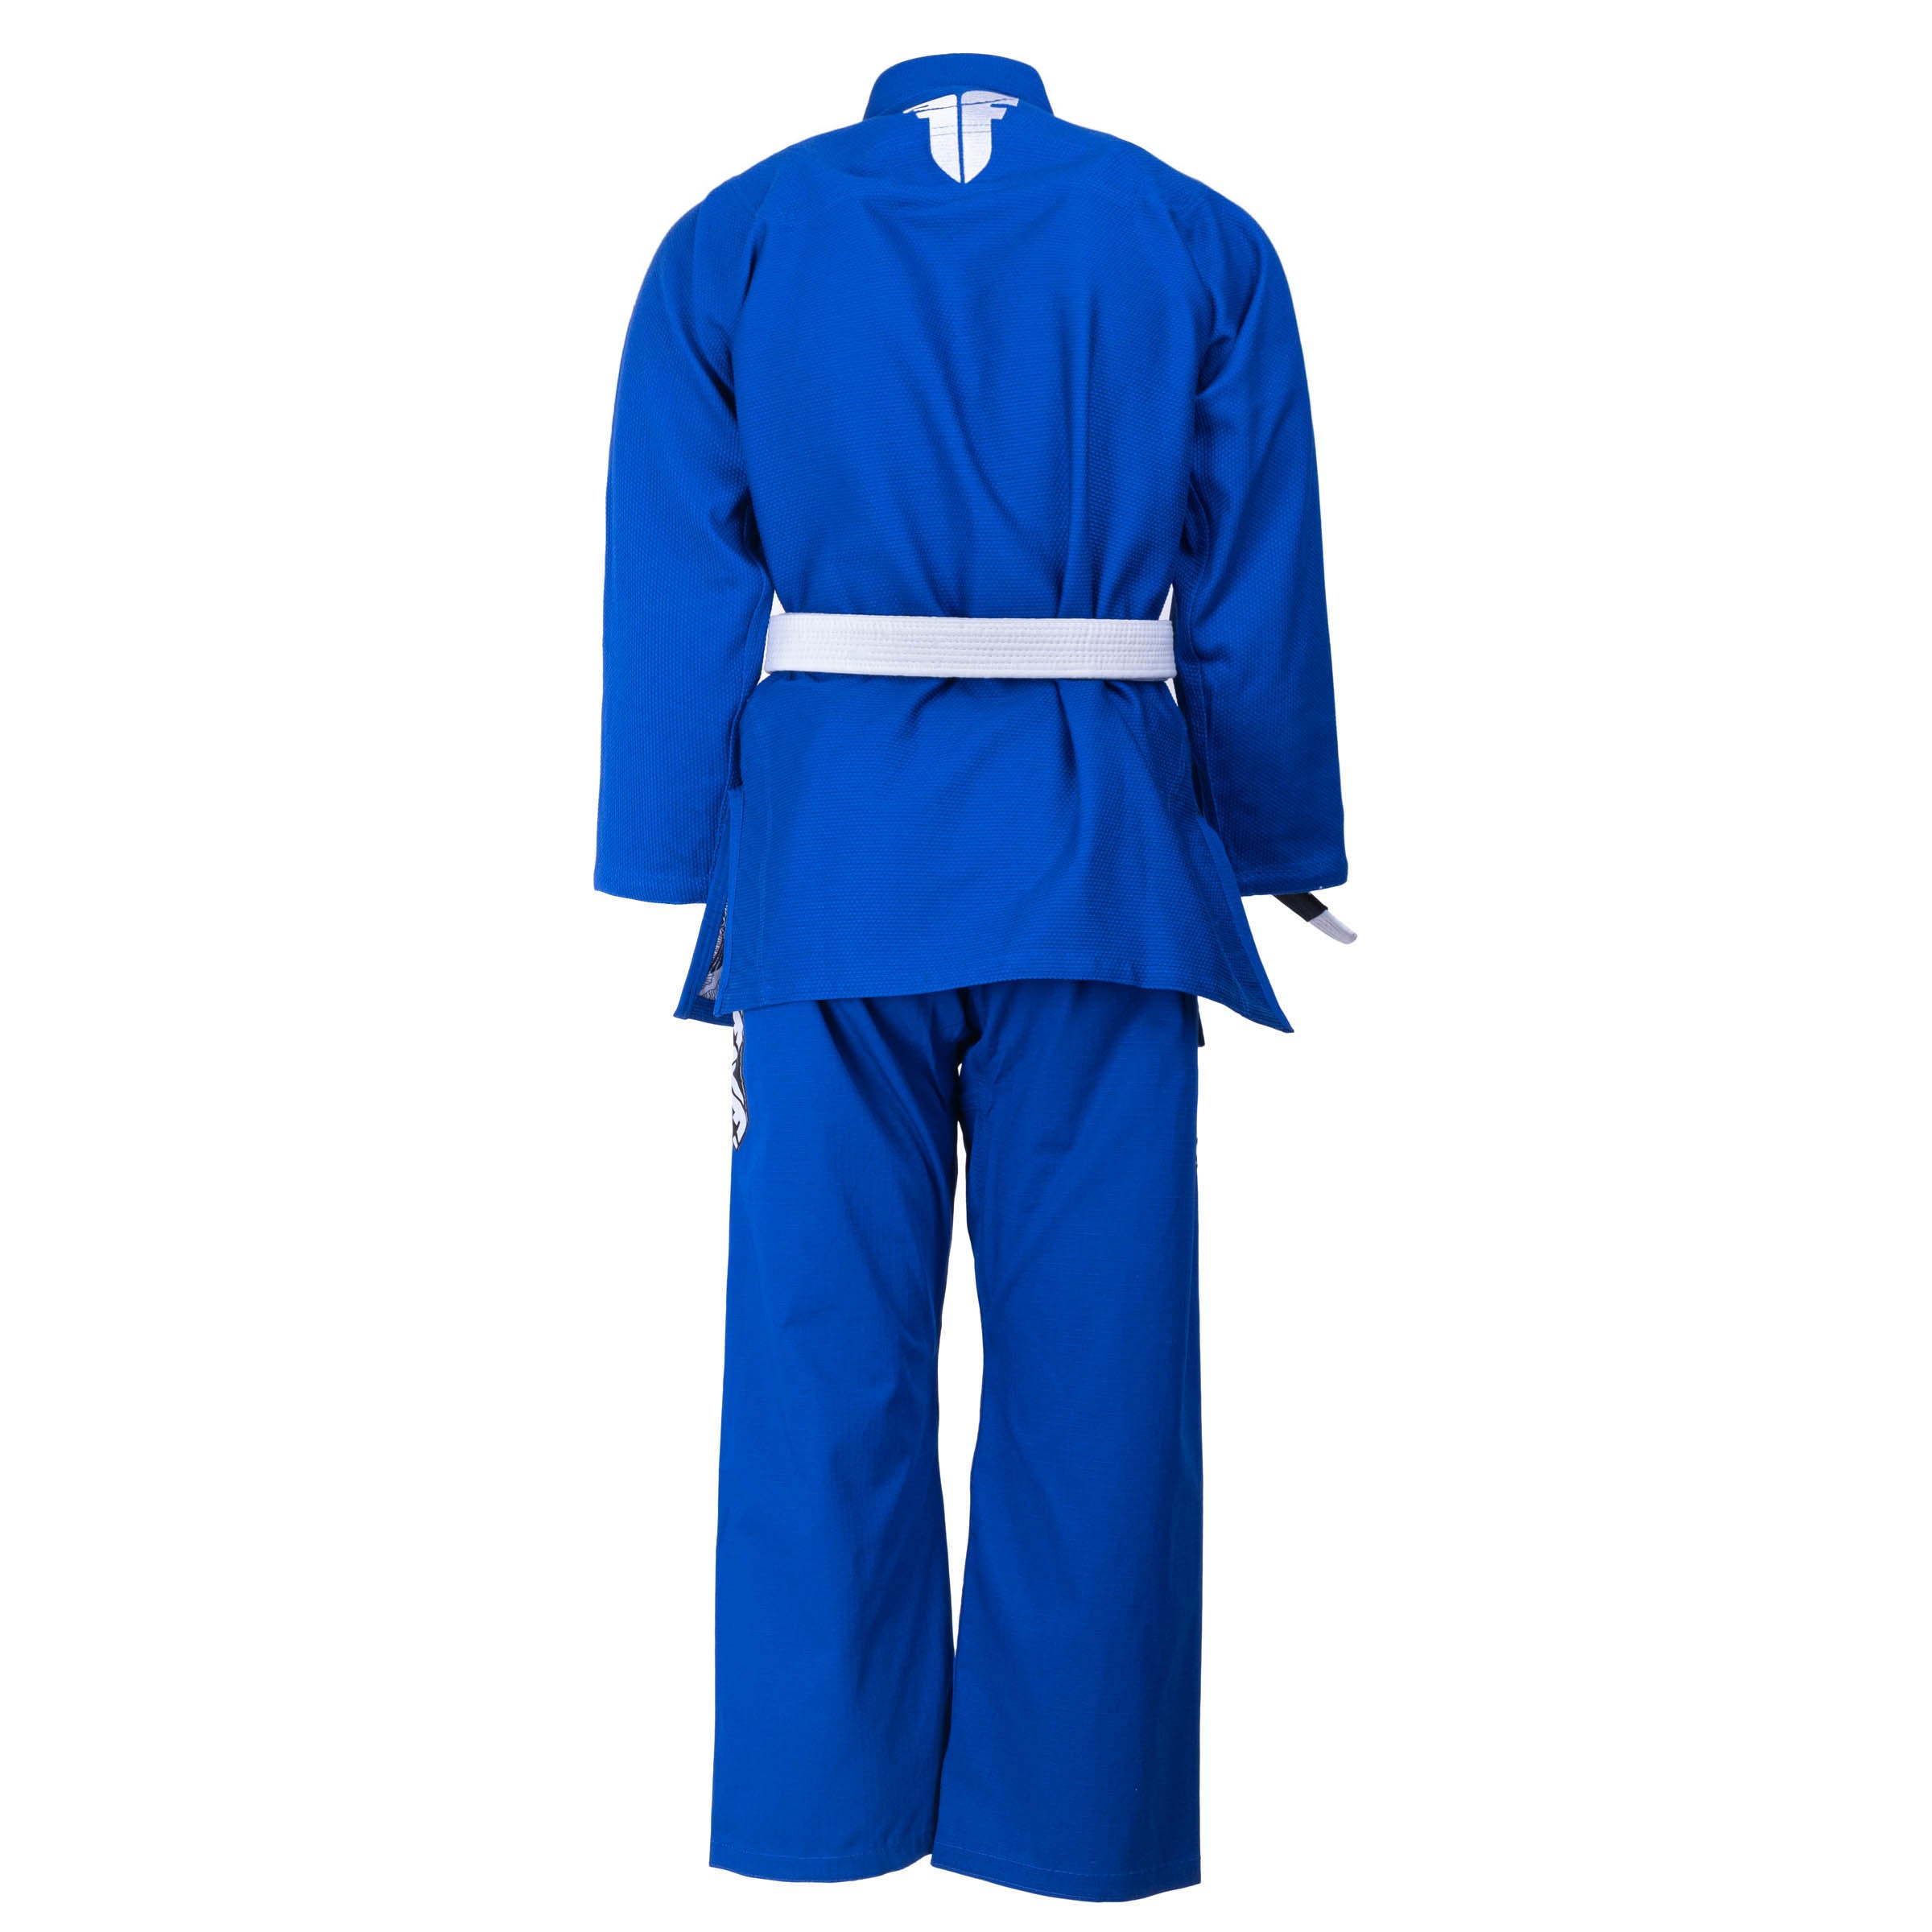 Fighter BJJ Uniform Samurai - blue, BJJBW-N02